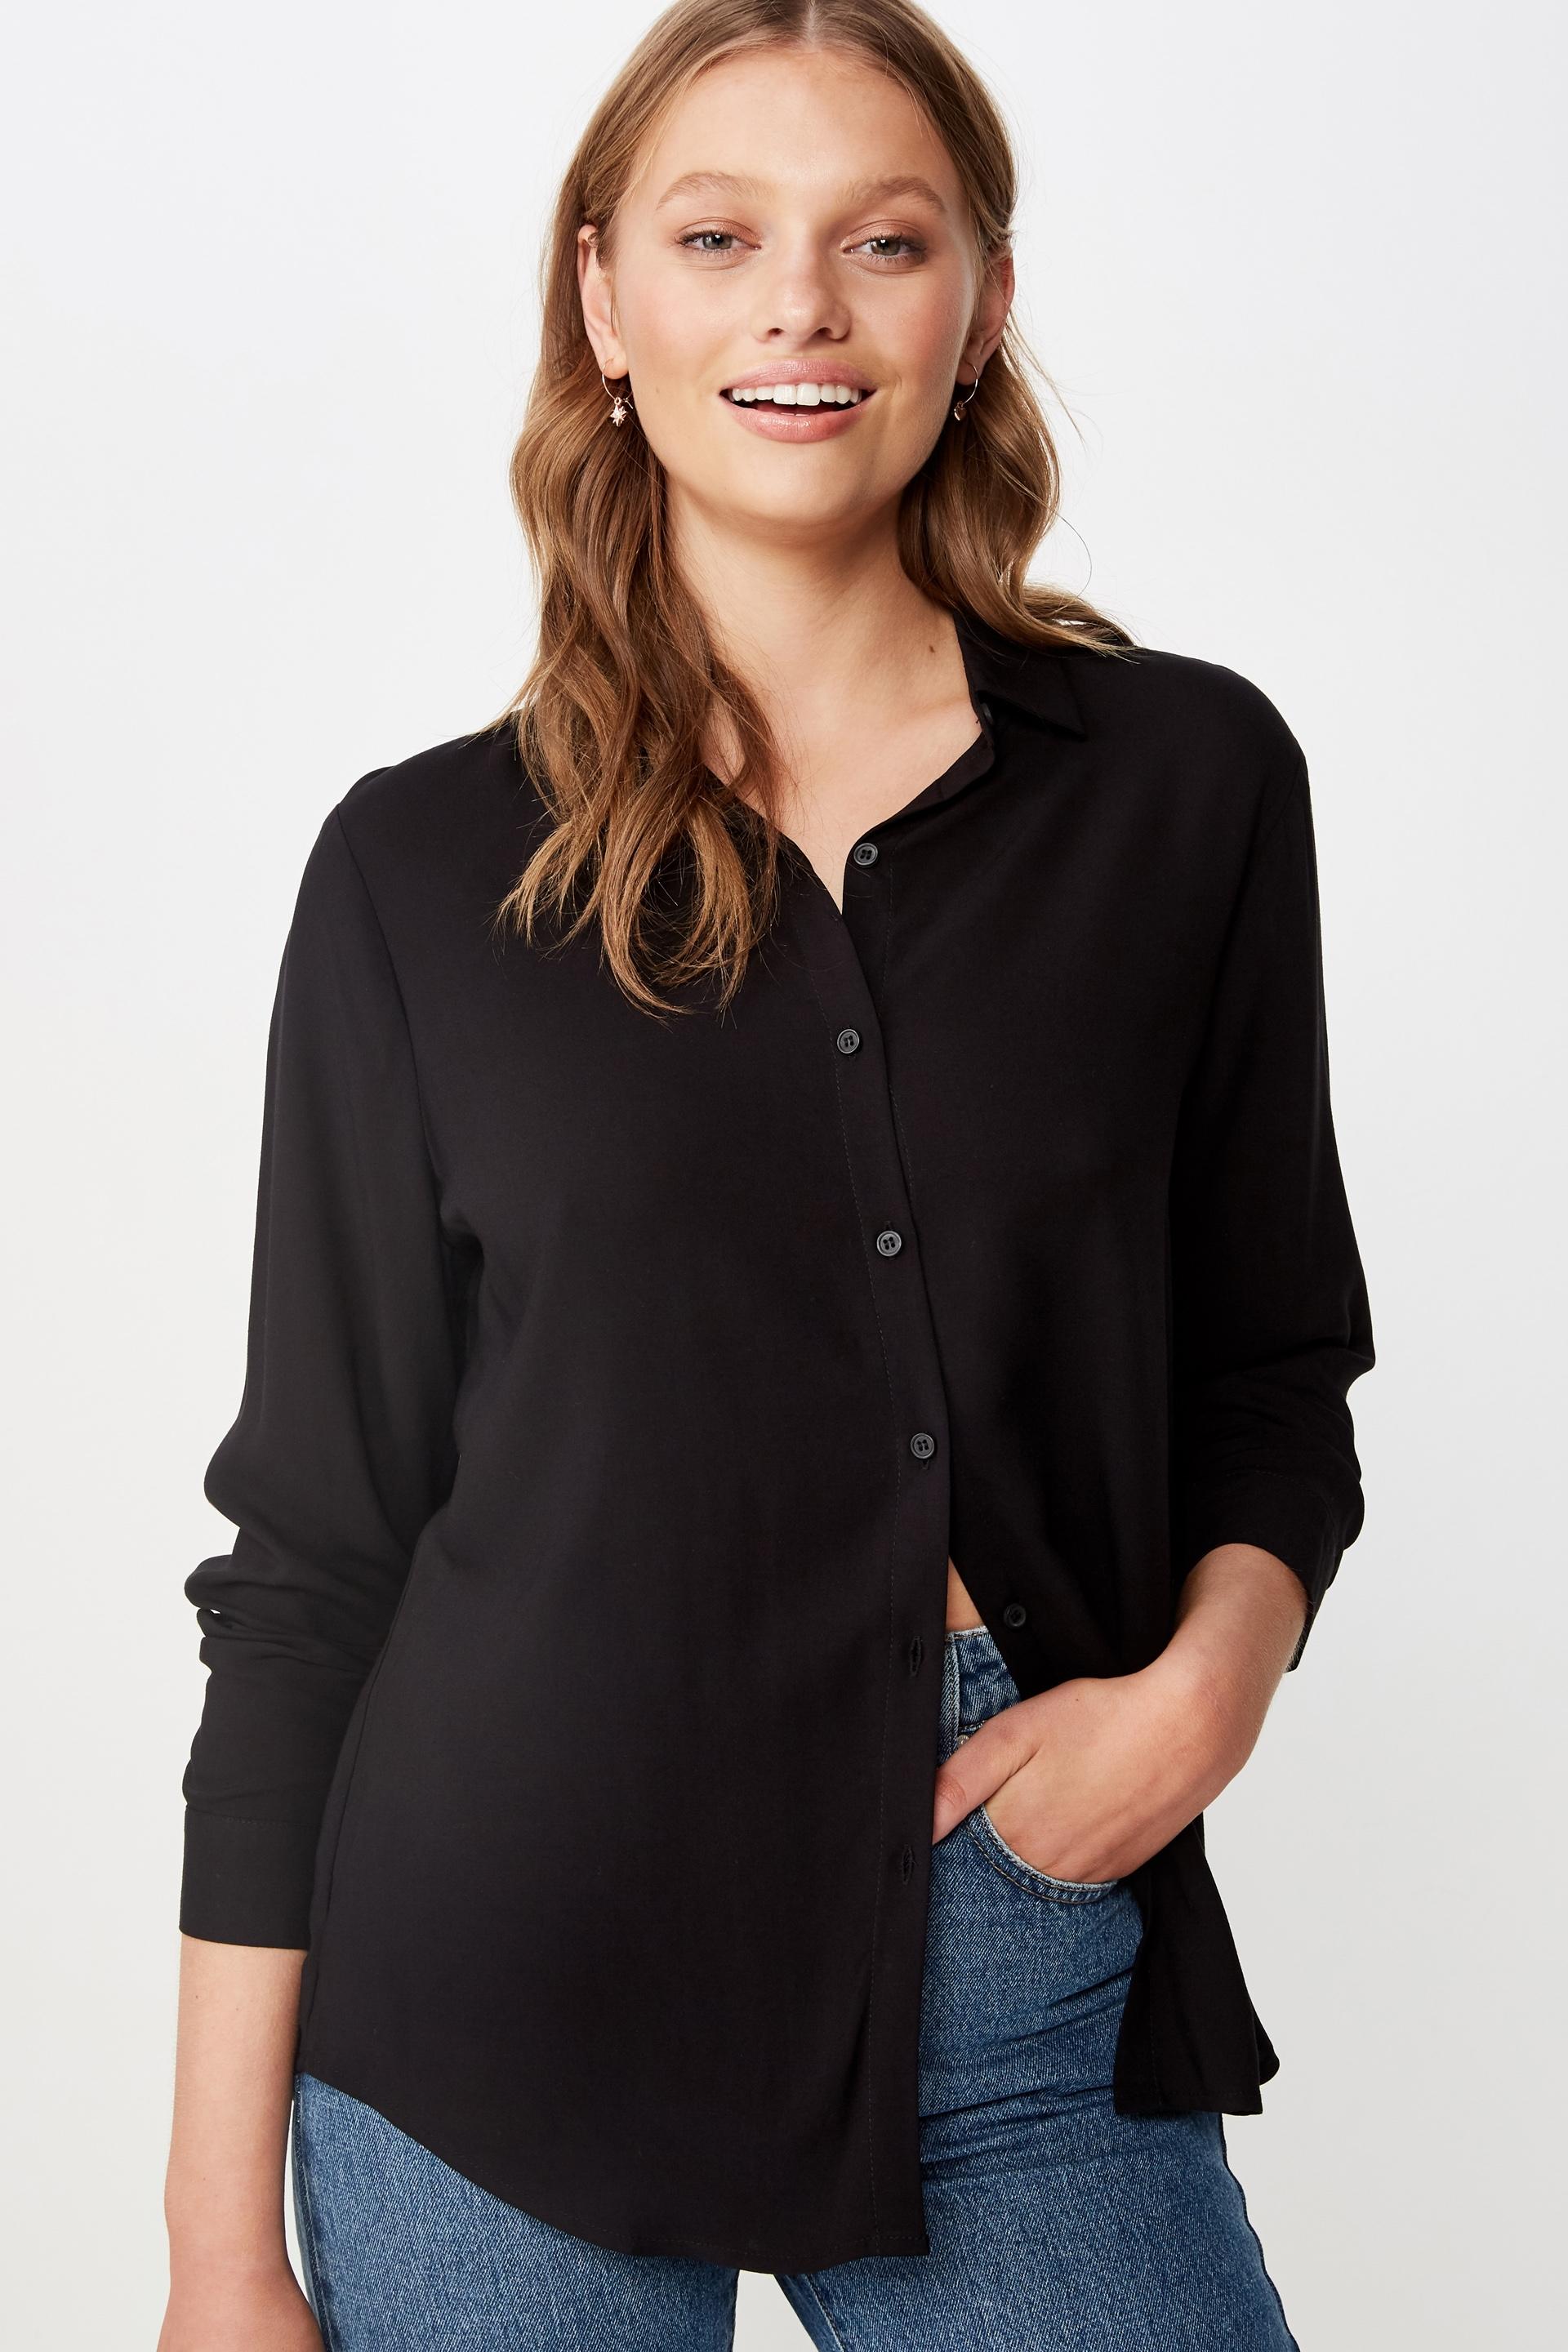 Rachel everyday shirt - black Cotton On Shirts | Superbalist.com